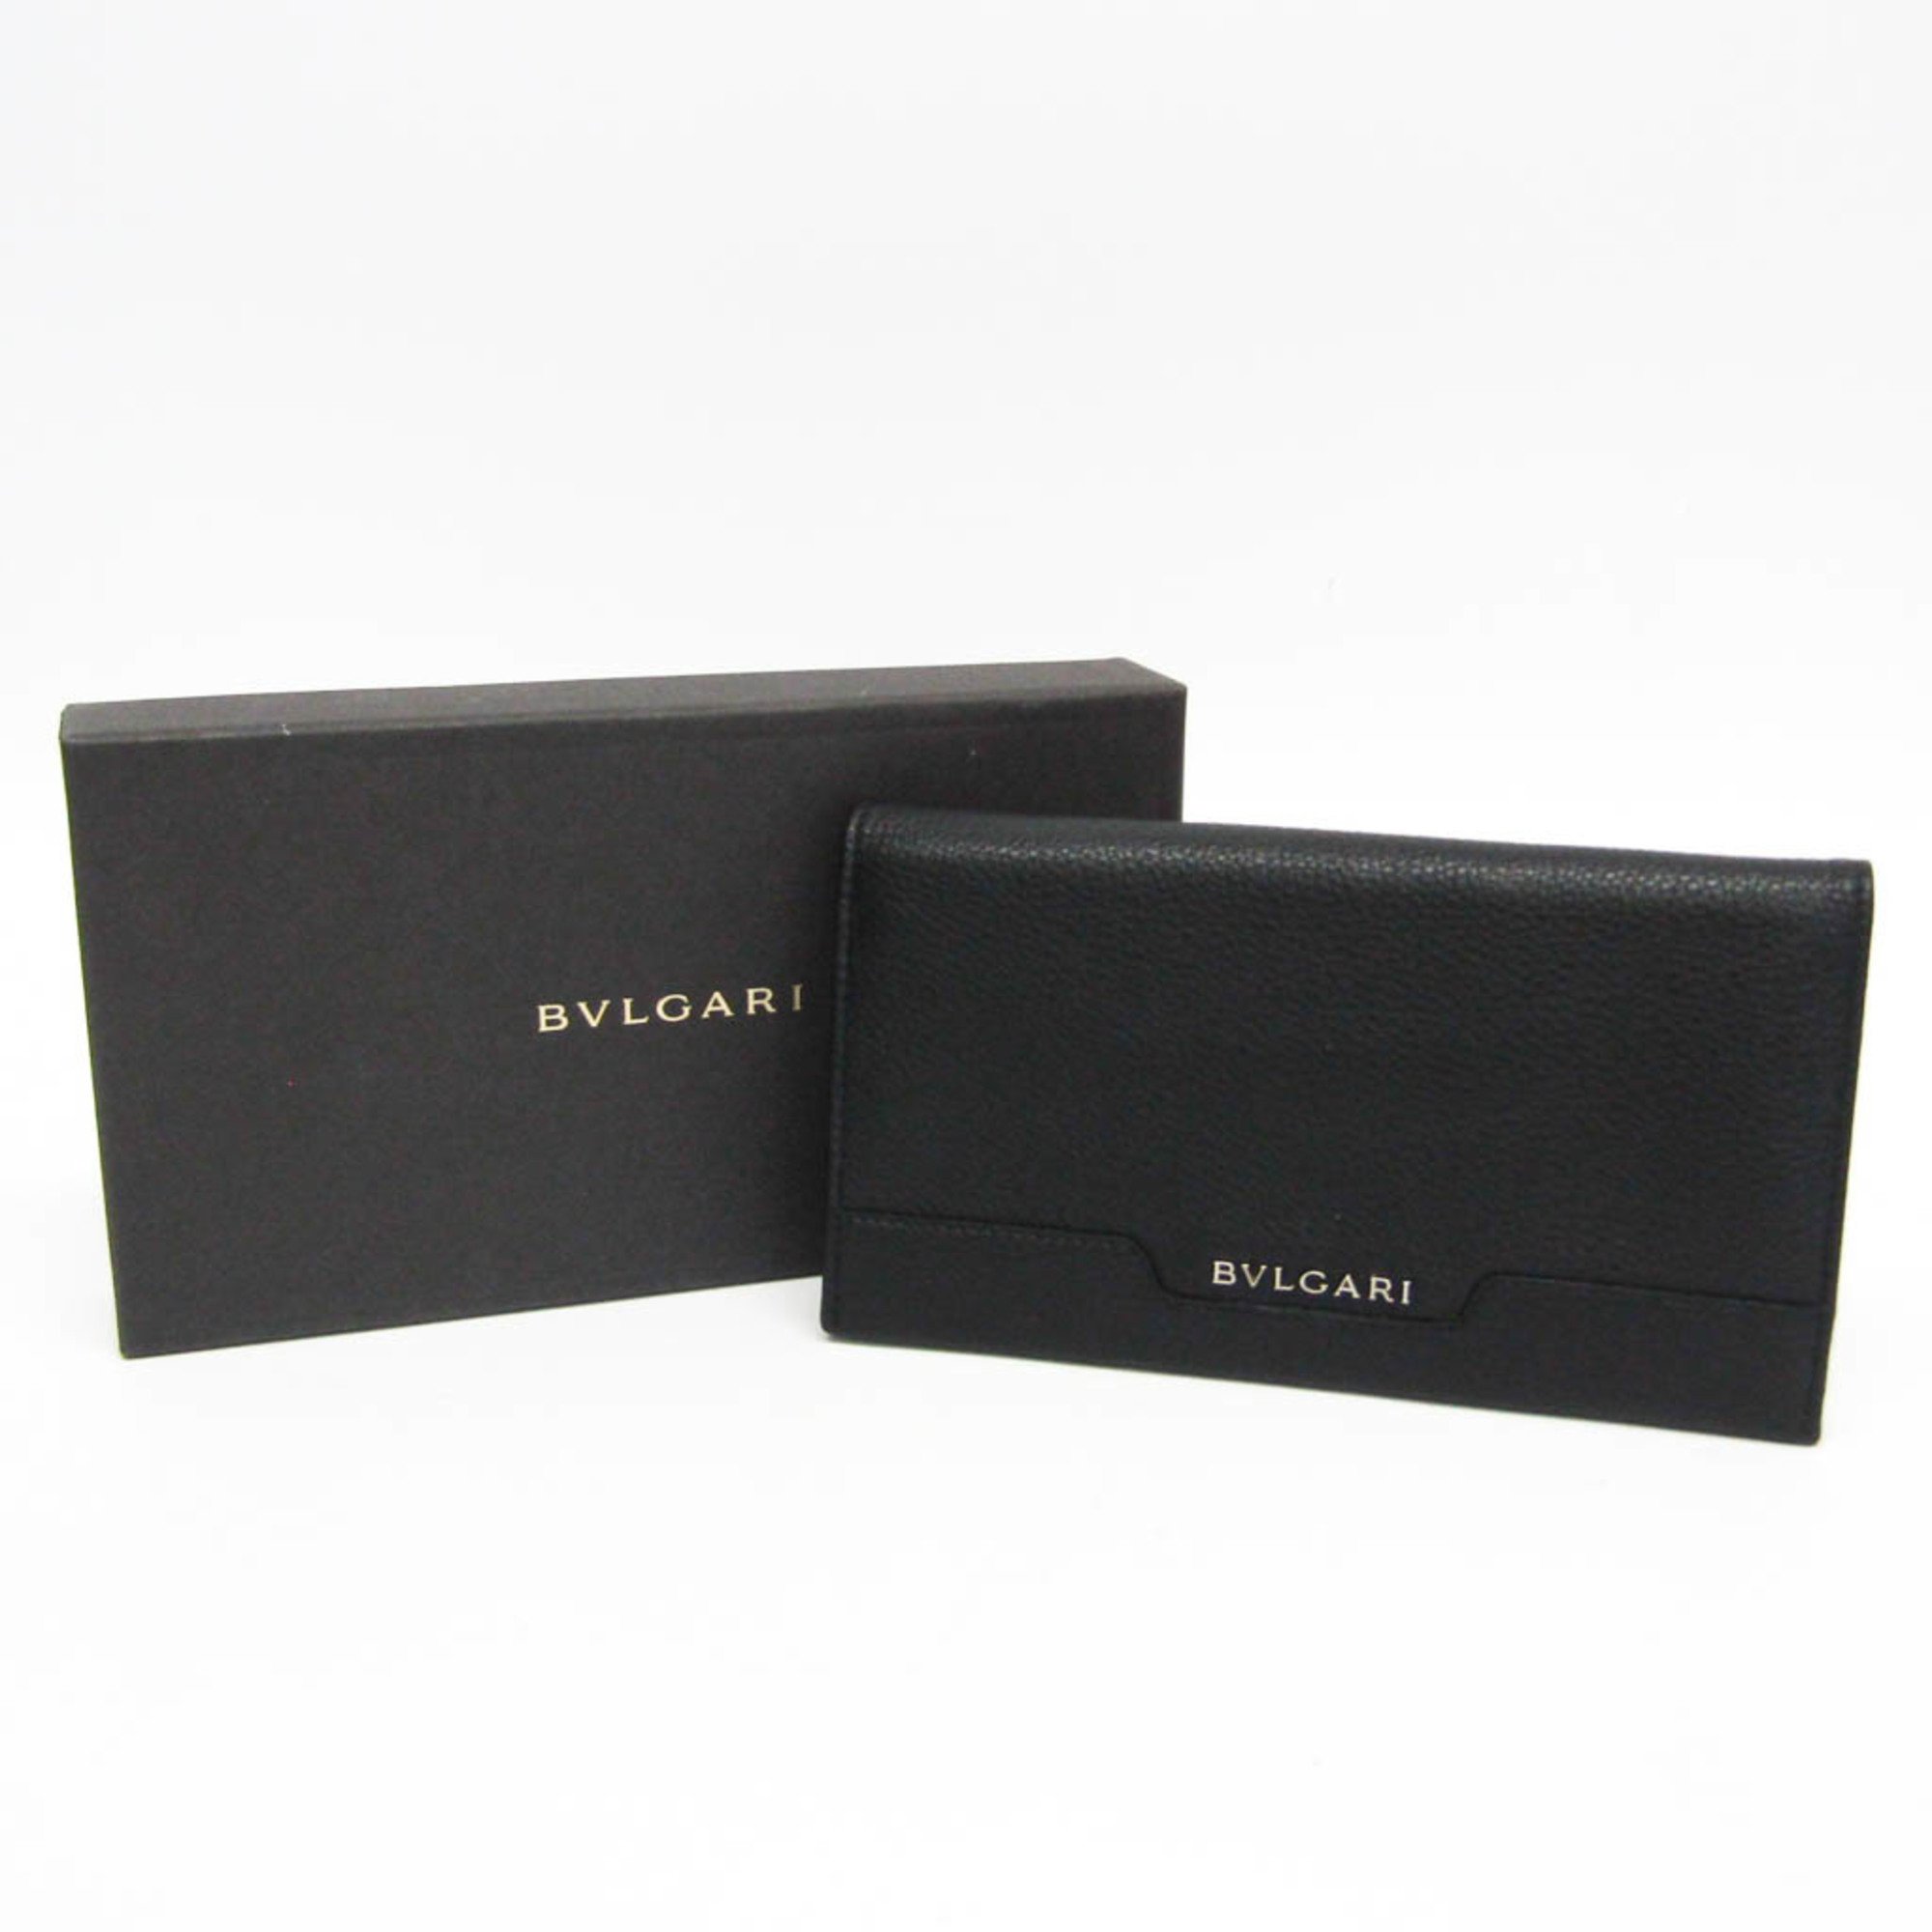 Bvlgari URBAN 33402 Men's Leather Long Wallet (bi-fold) Black